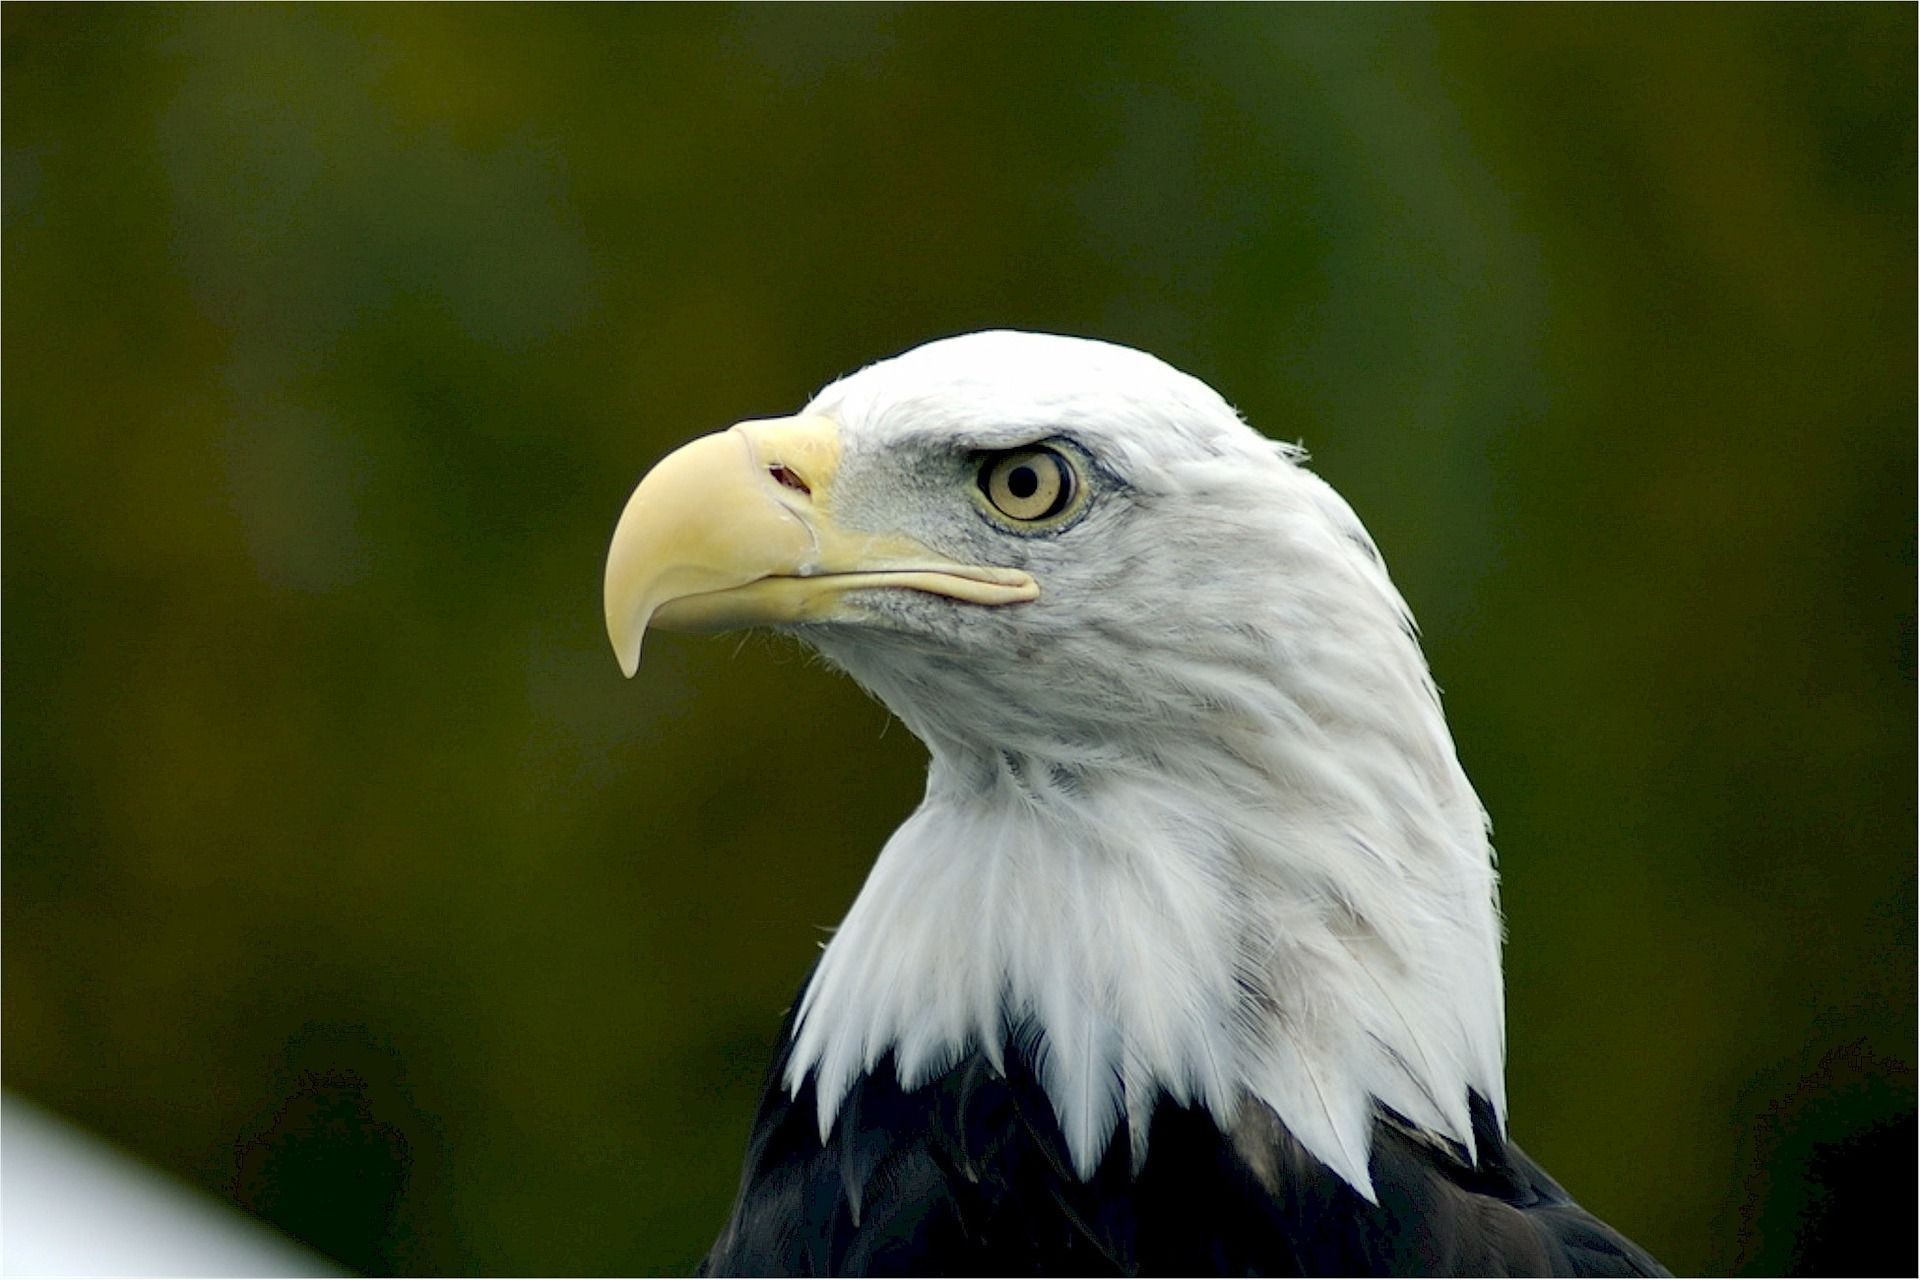 1920x1280 Flying American eagle wallppaer 1920x1200p 529071 American eagle HD  wallpaper in high resolution 